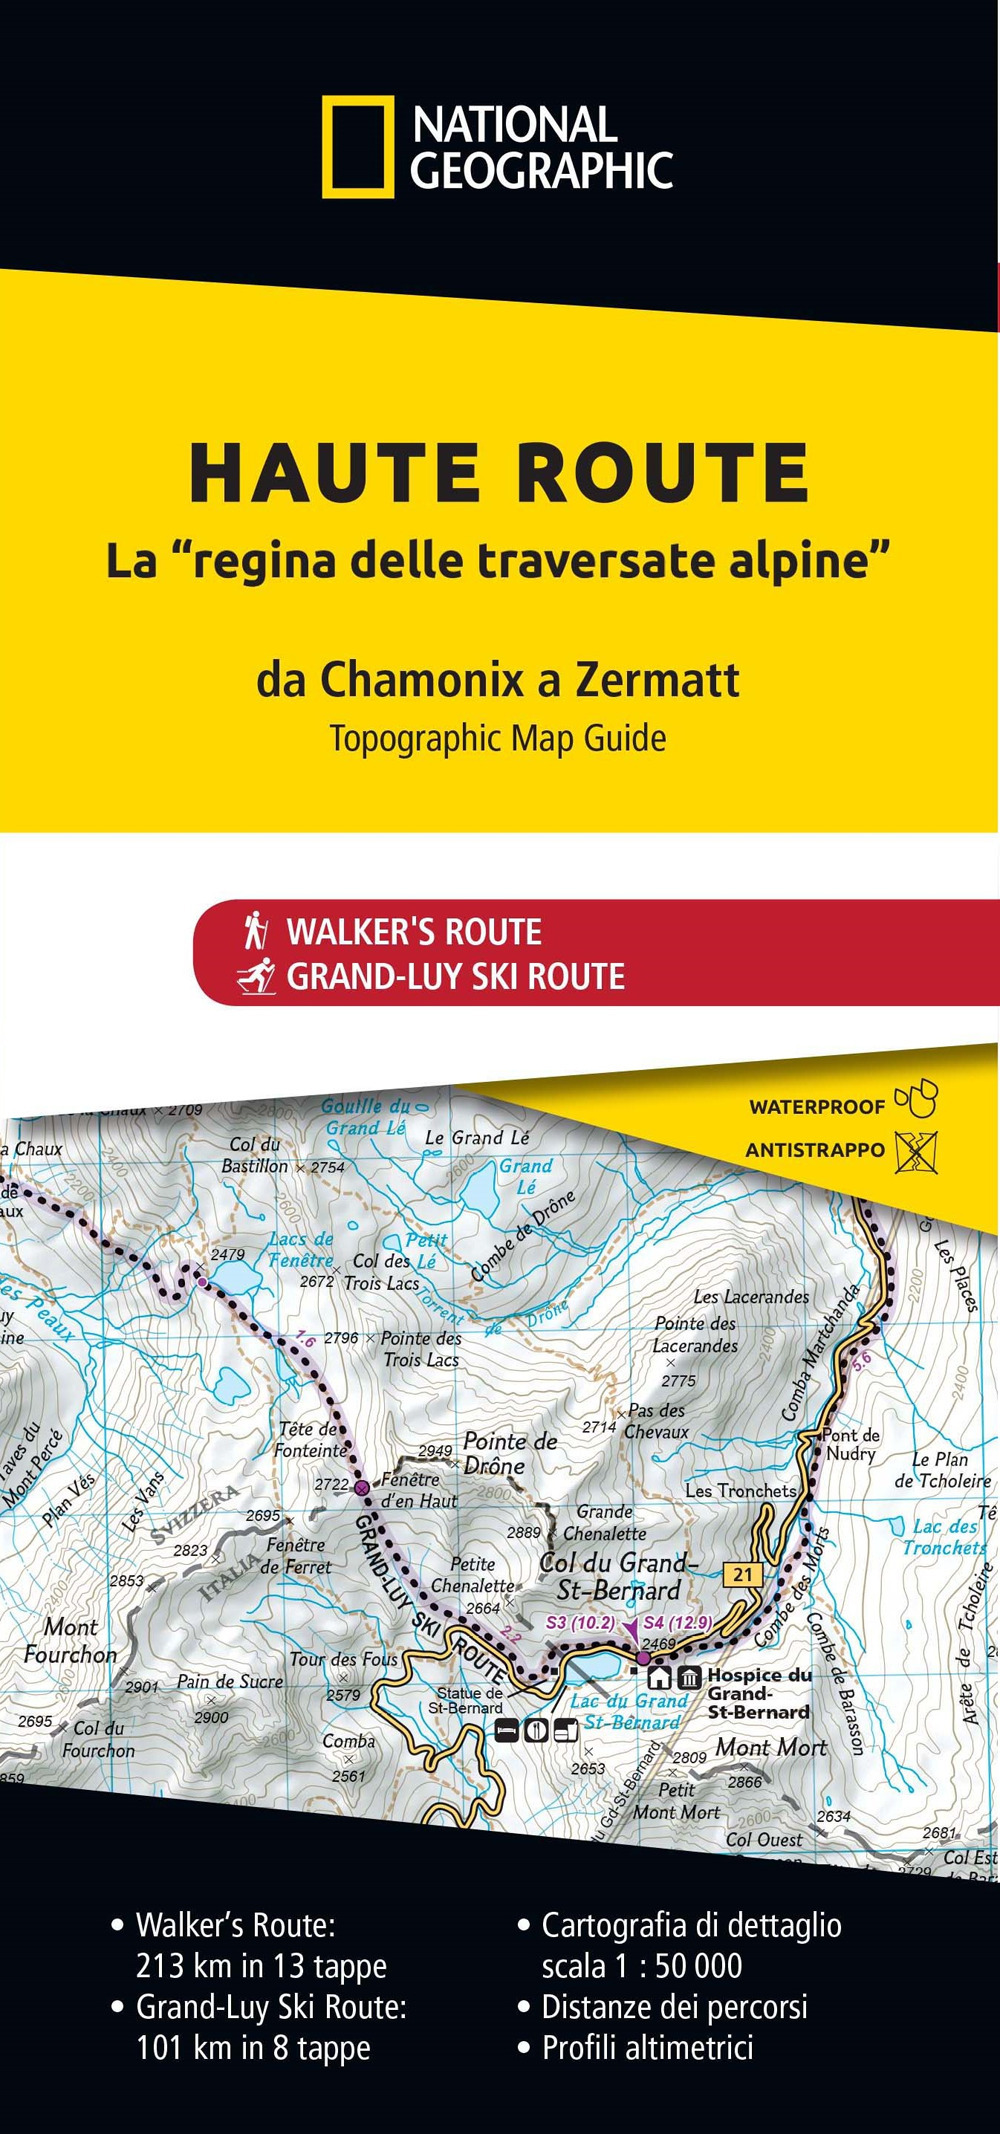 Haute Route. La regina delle traversate alpine. Da Chamonix a Zermatt